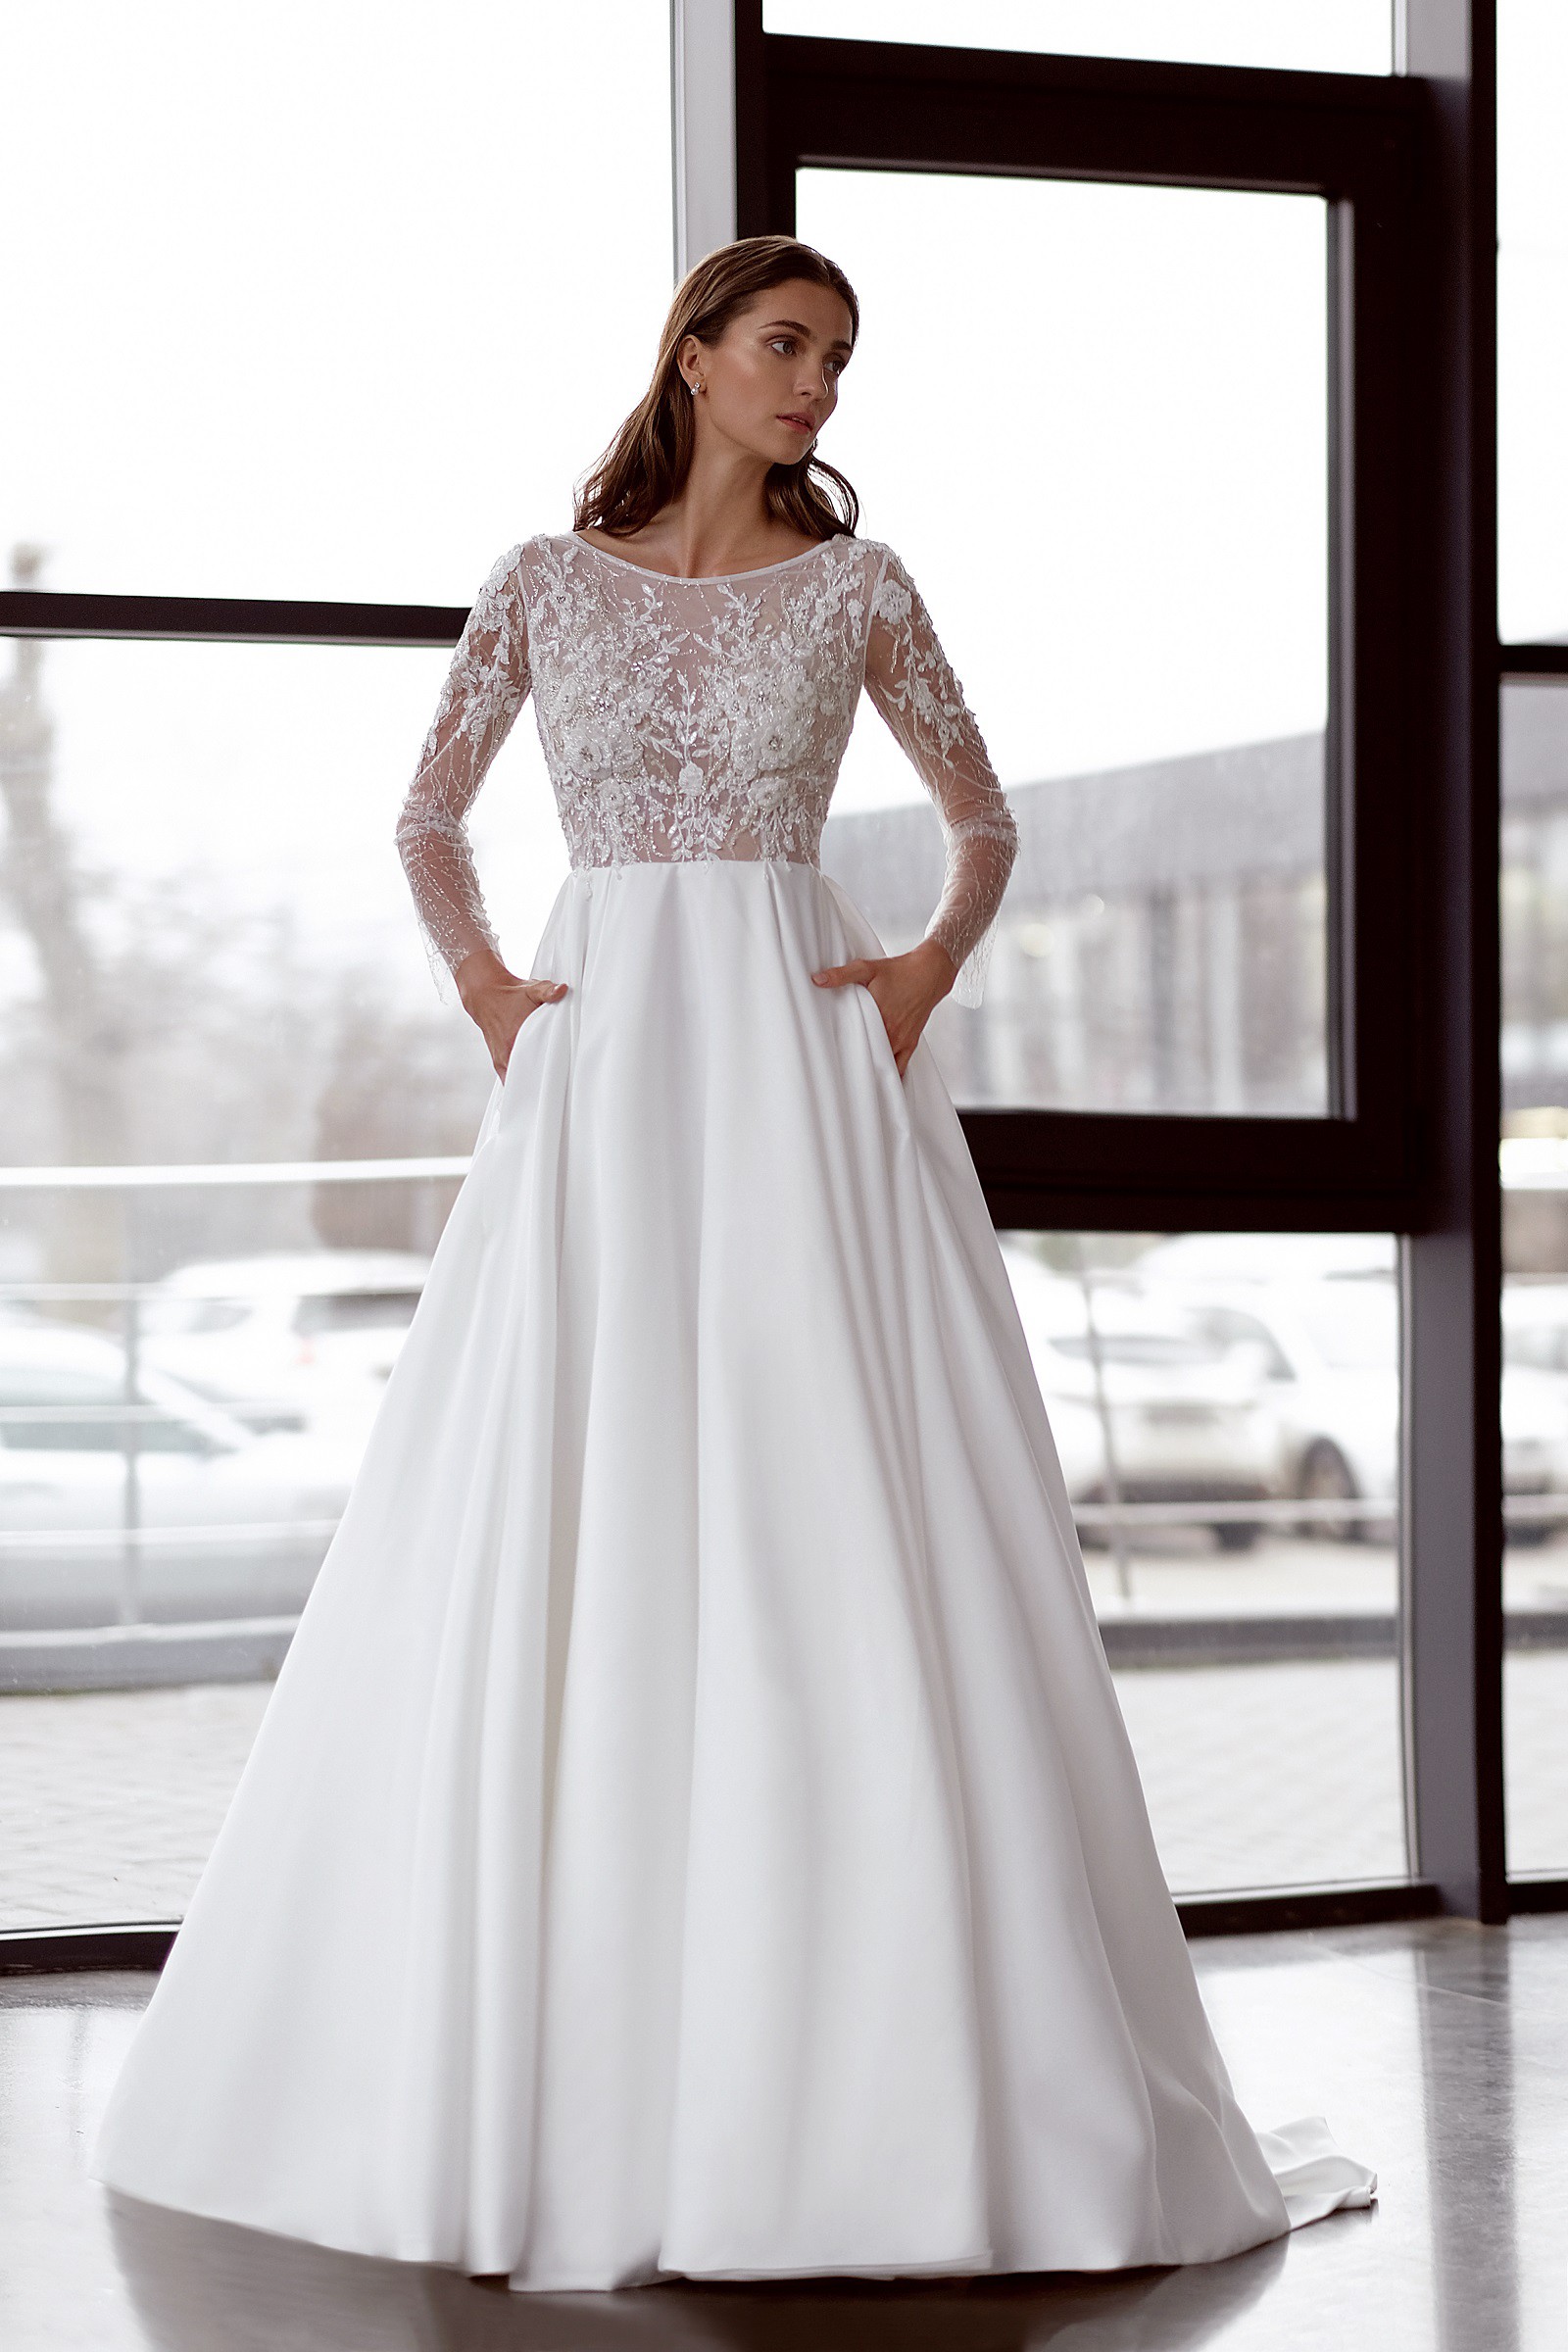 Elena Morar Skylar Sample Wedding Dress - Stillwhite